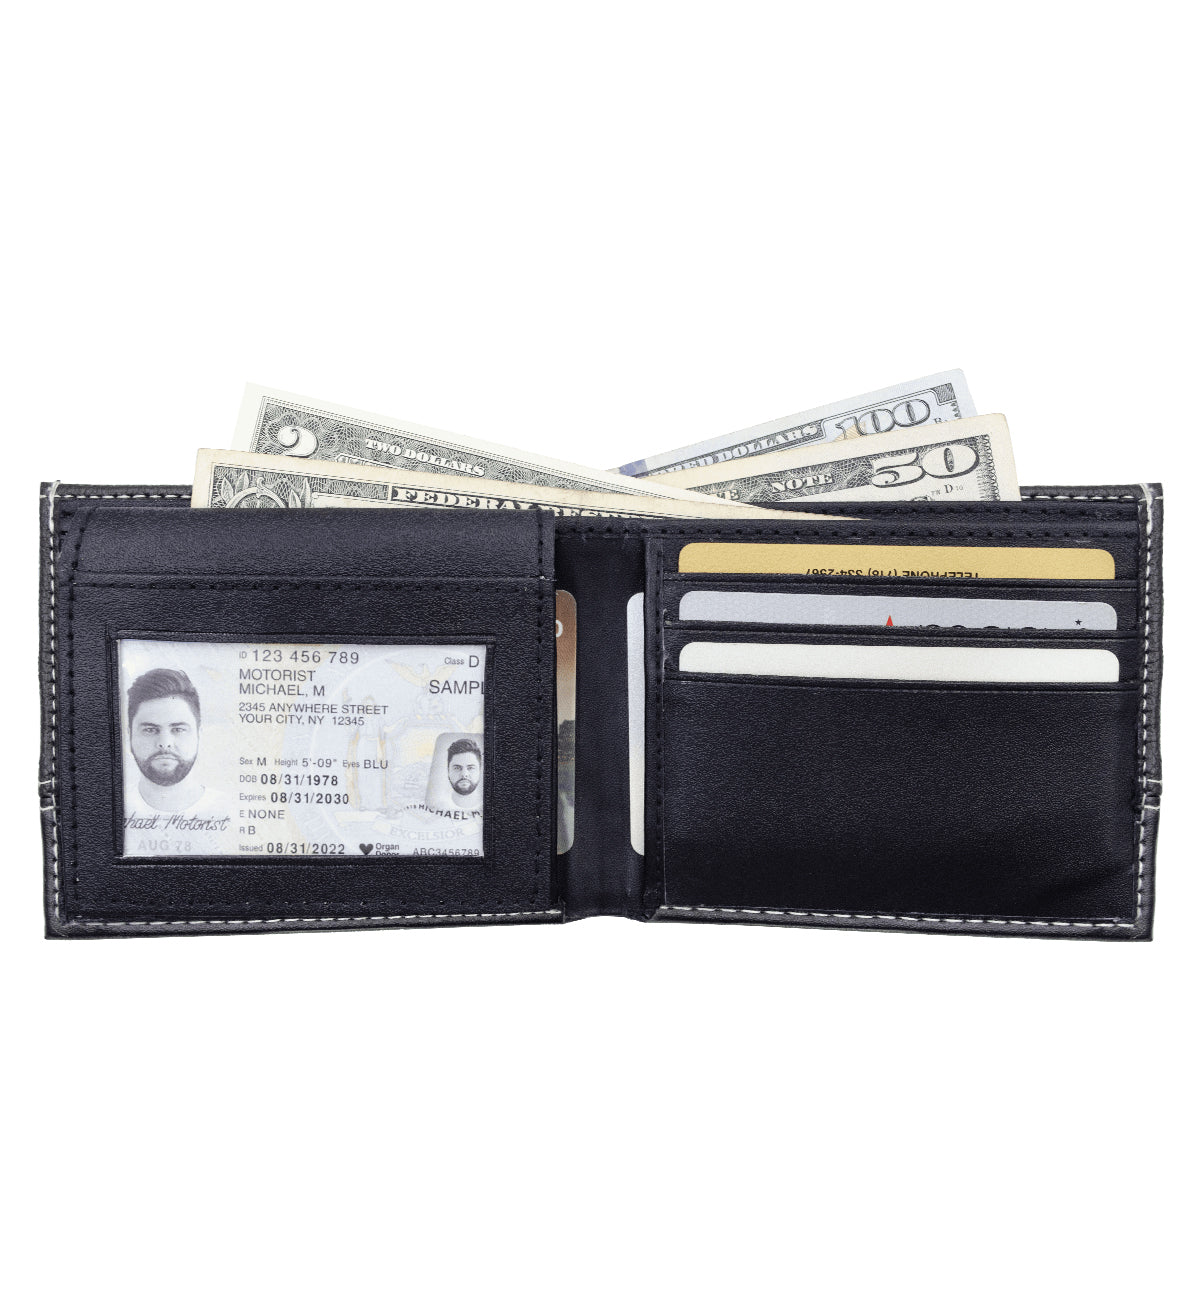 Black Grain Pattern Vegan Leather Men's Bifold Wallet Double Flap Holder